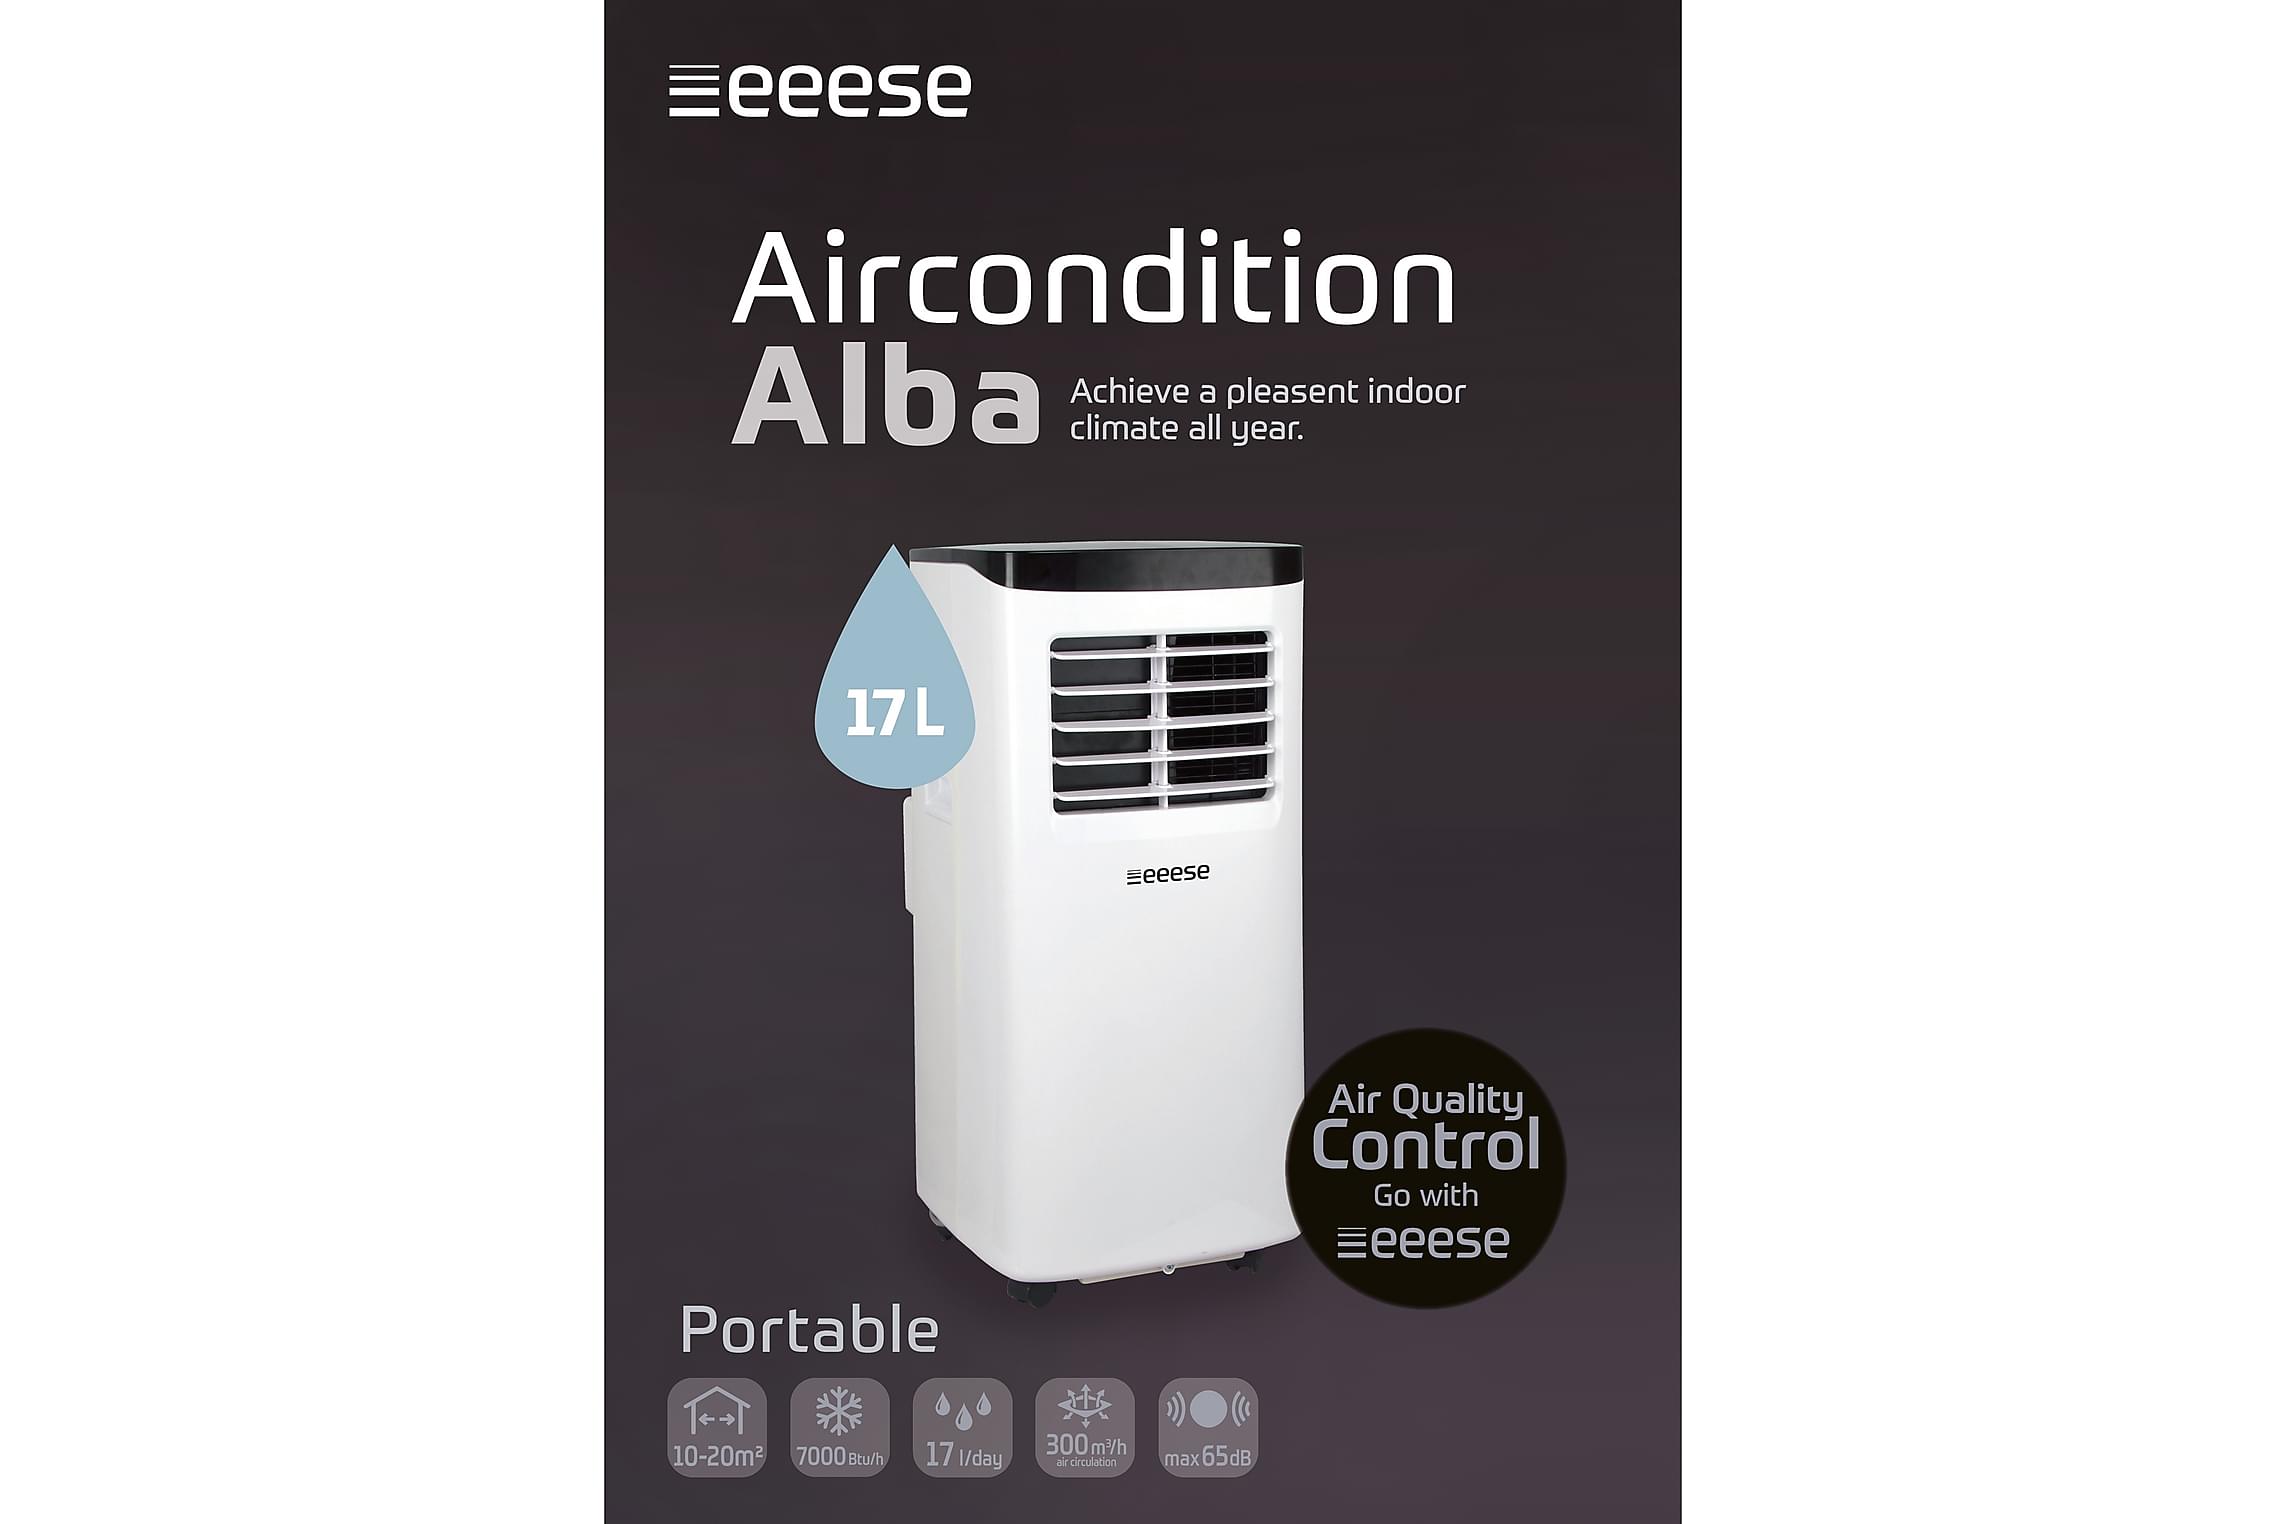 Aircondition Alba 7000 Eeese